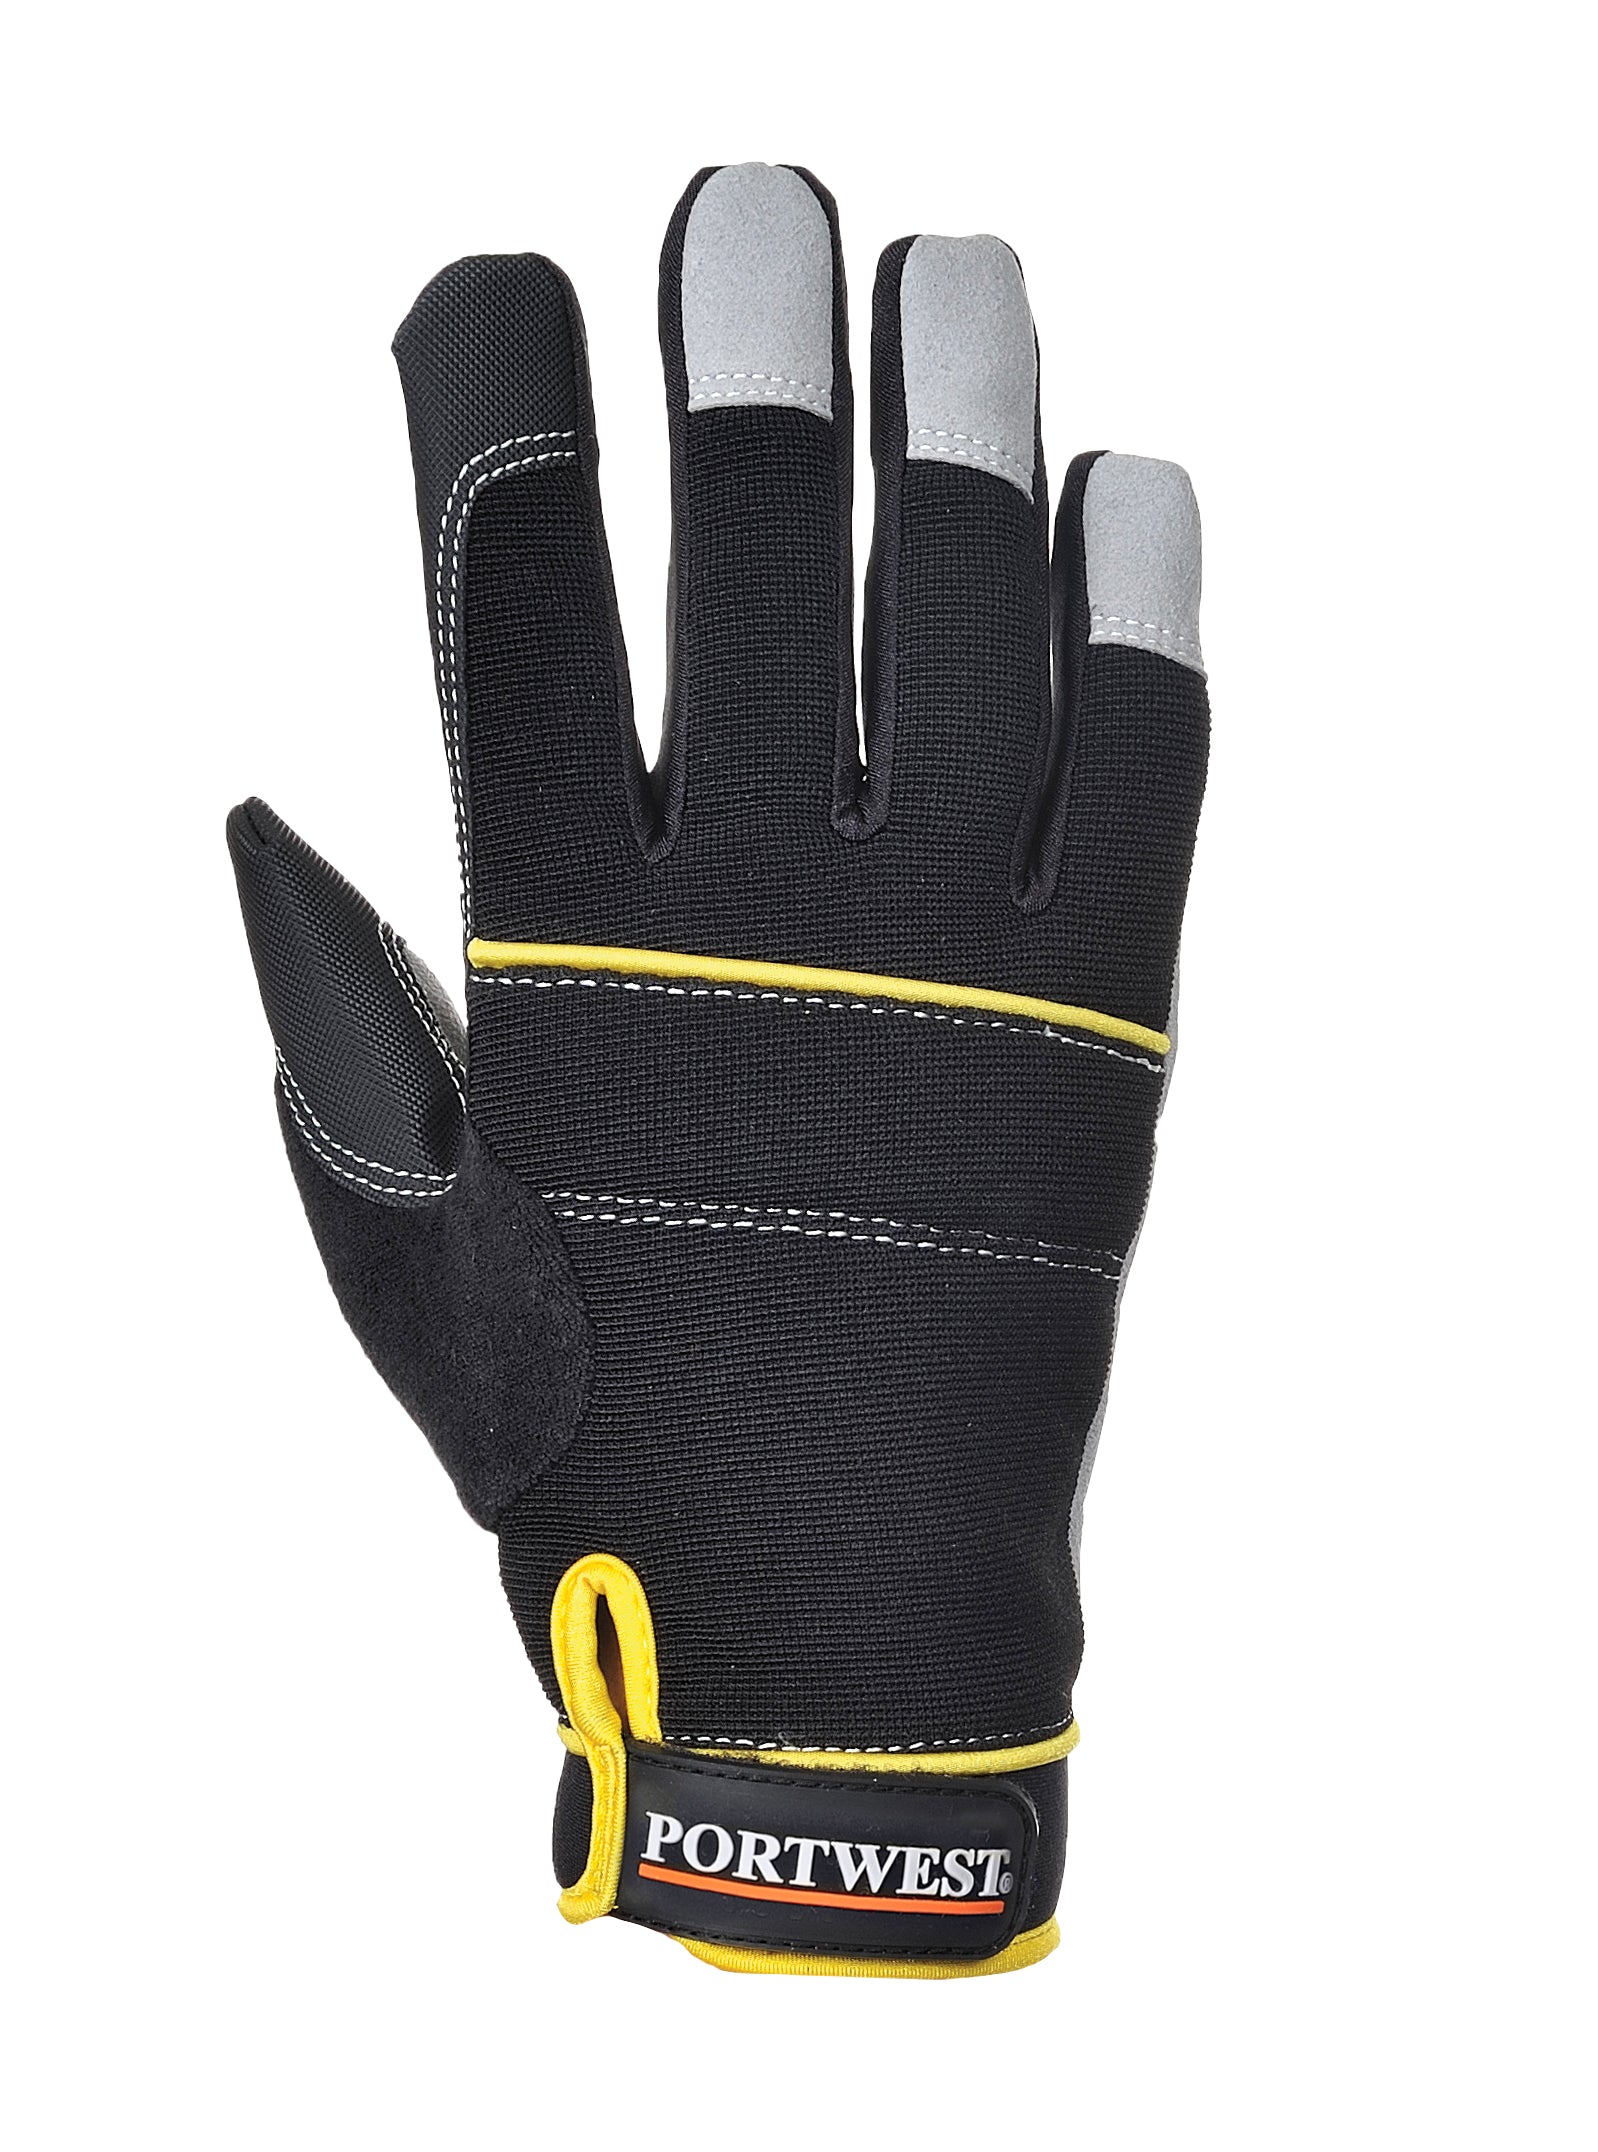 A710- Tradesman Glove Front